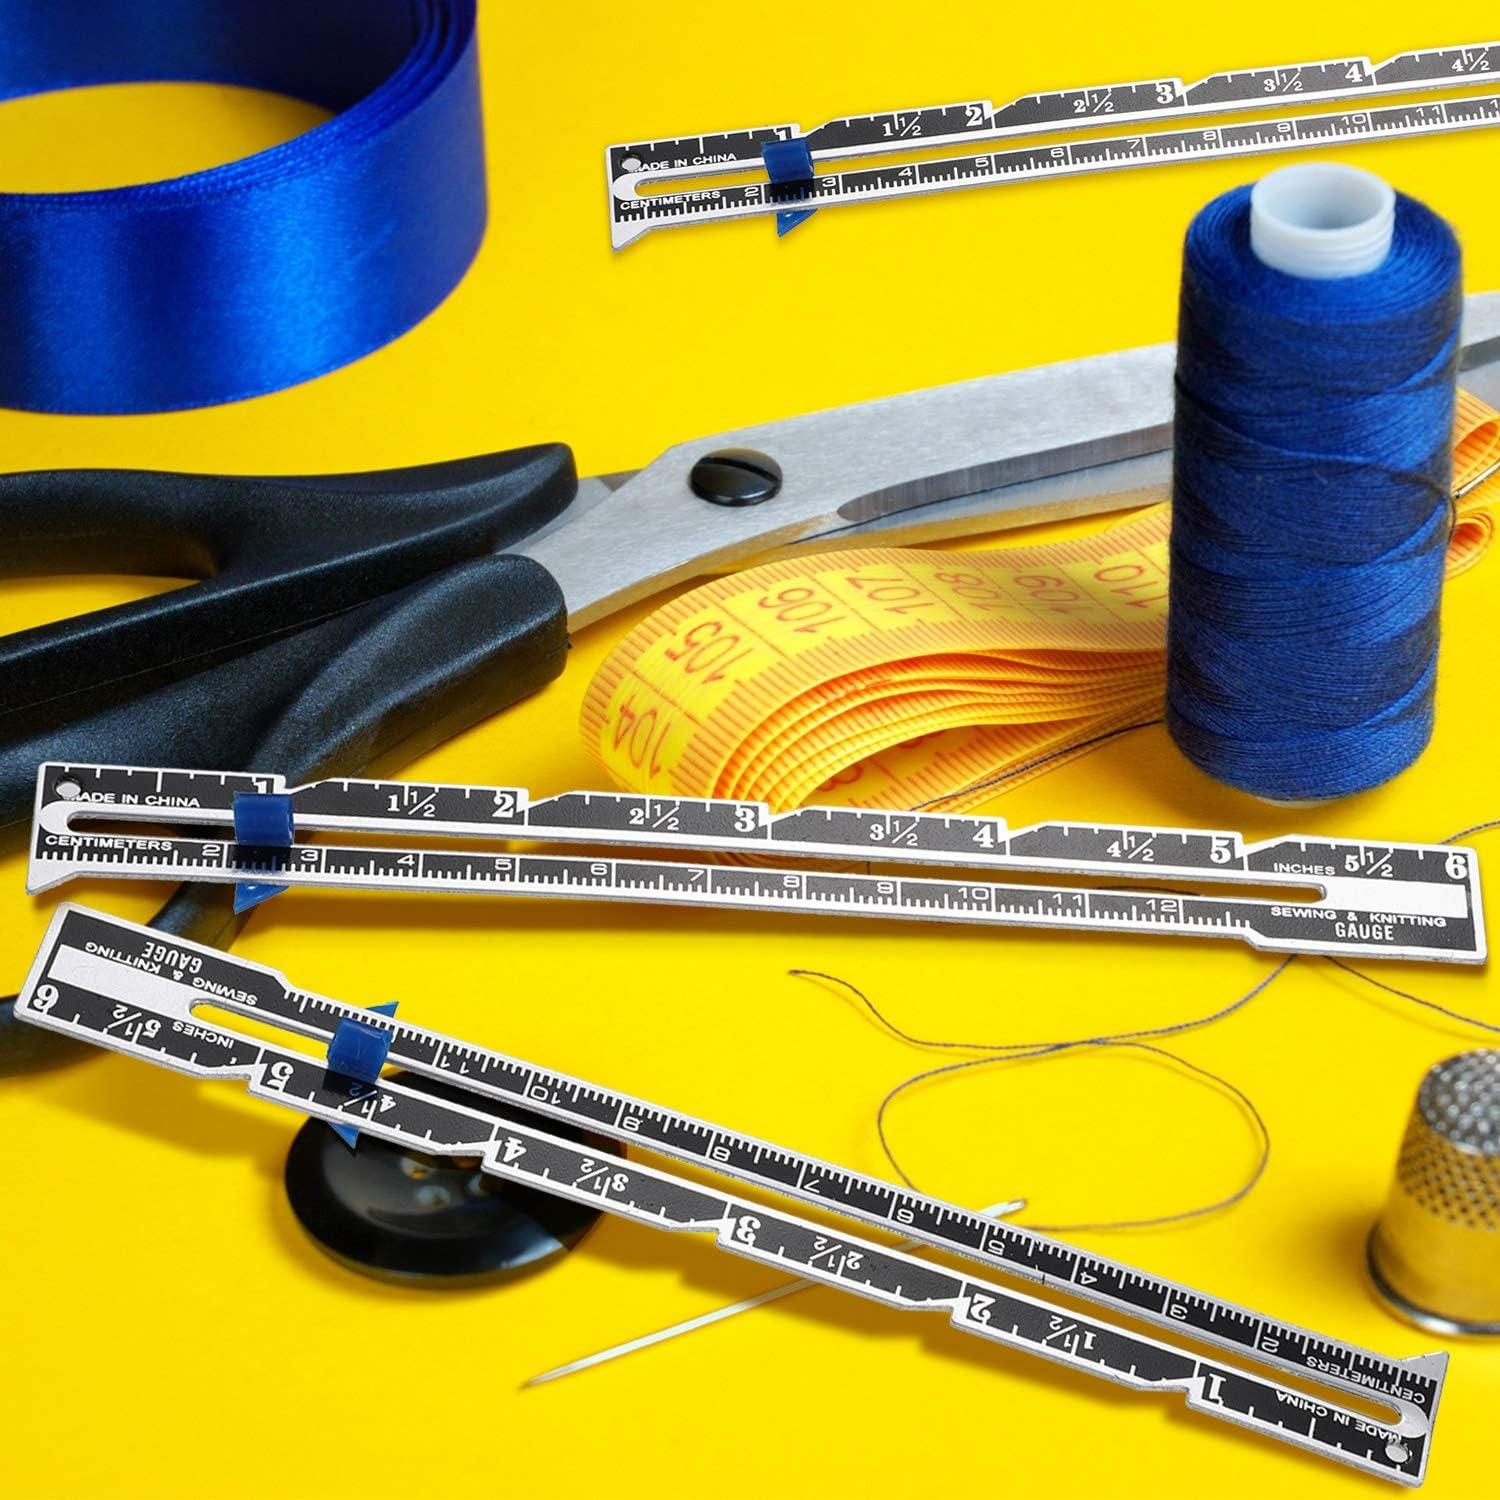 Frienda 2 Pieces Sewing Gauge Metal Sliding Gauge Sewing Measuring Tool  Quilting Gauge Ruler for Knitting Crafting Sewing Hemming